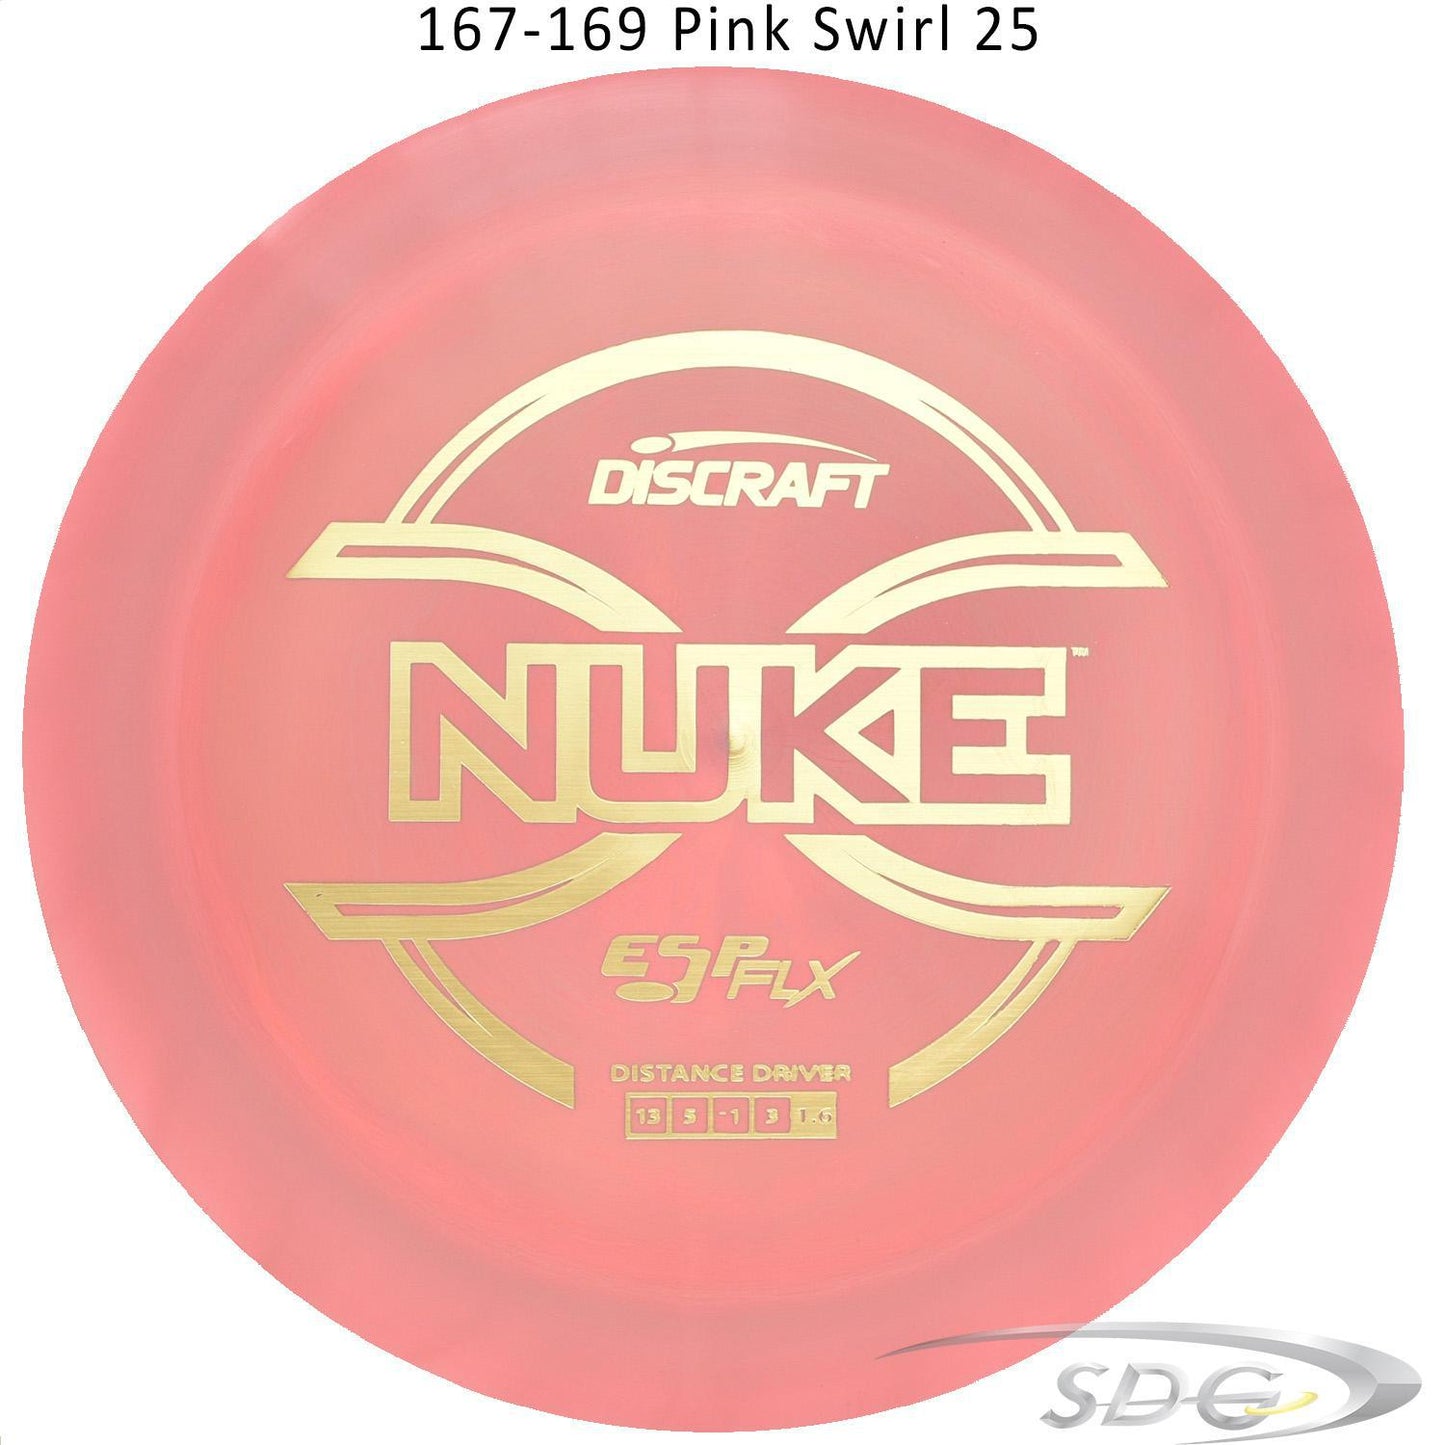 discraft-esp-flx-nuke-disc-golf-distance-driver 167-169 Pink Swirl 25 